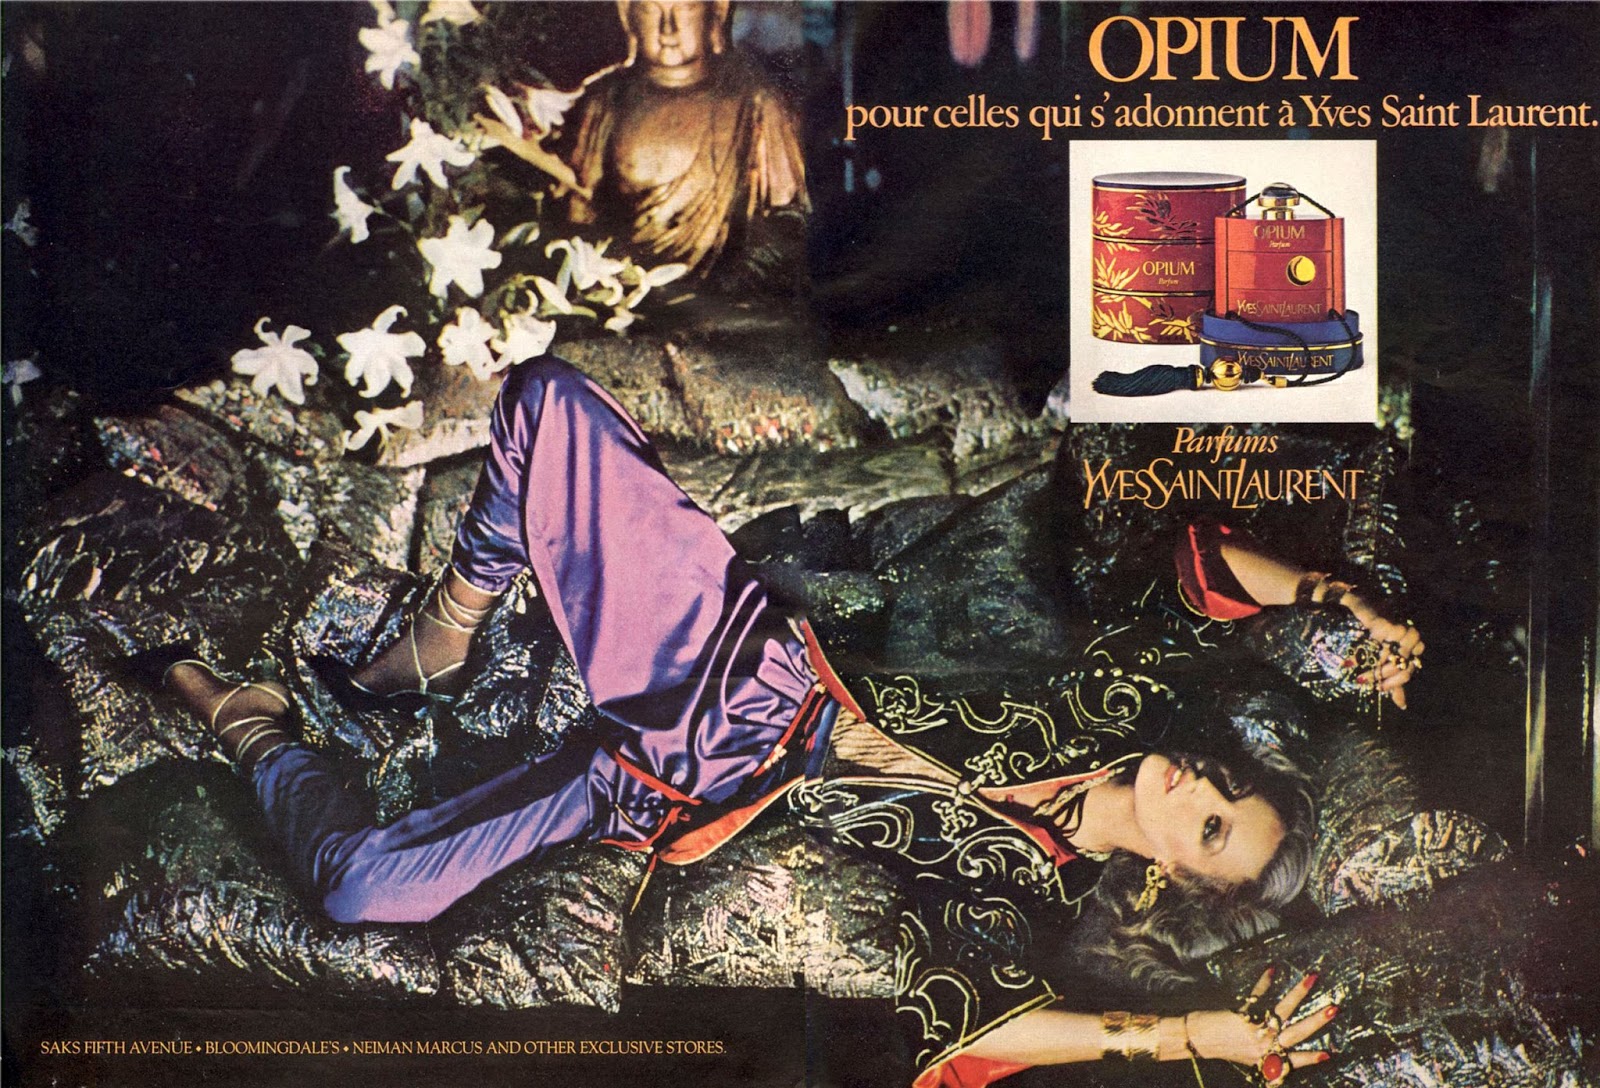 jerry-hall-opium-perfume-campaign-1977.jpg